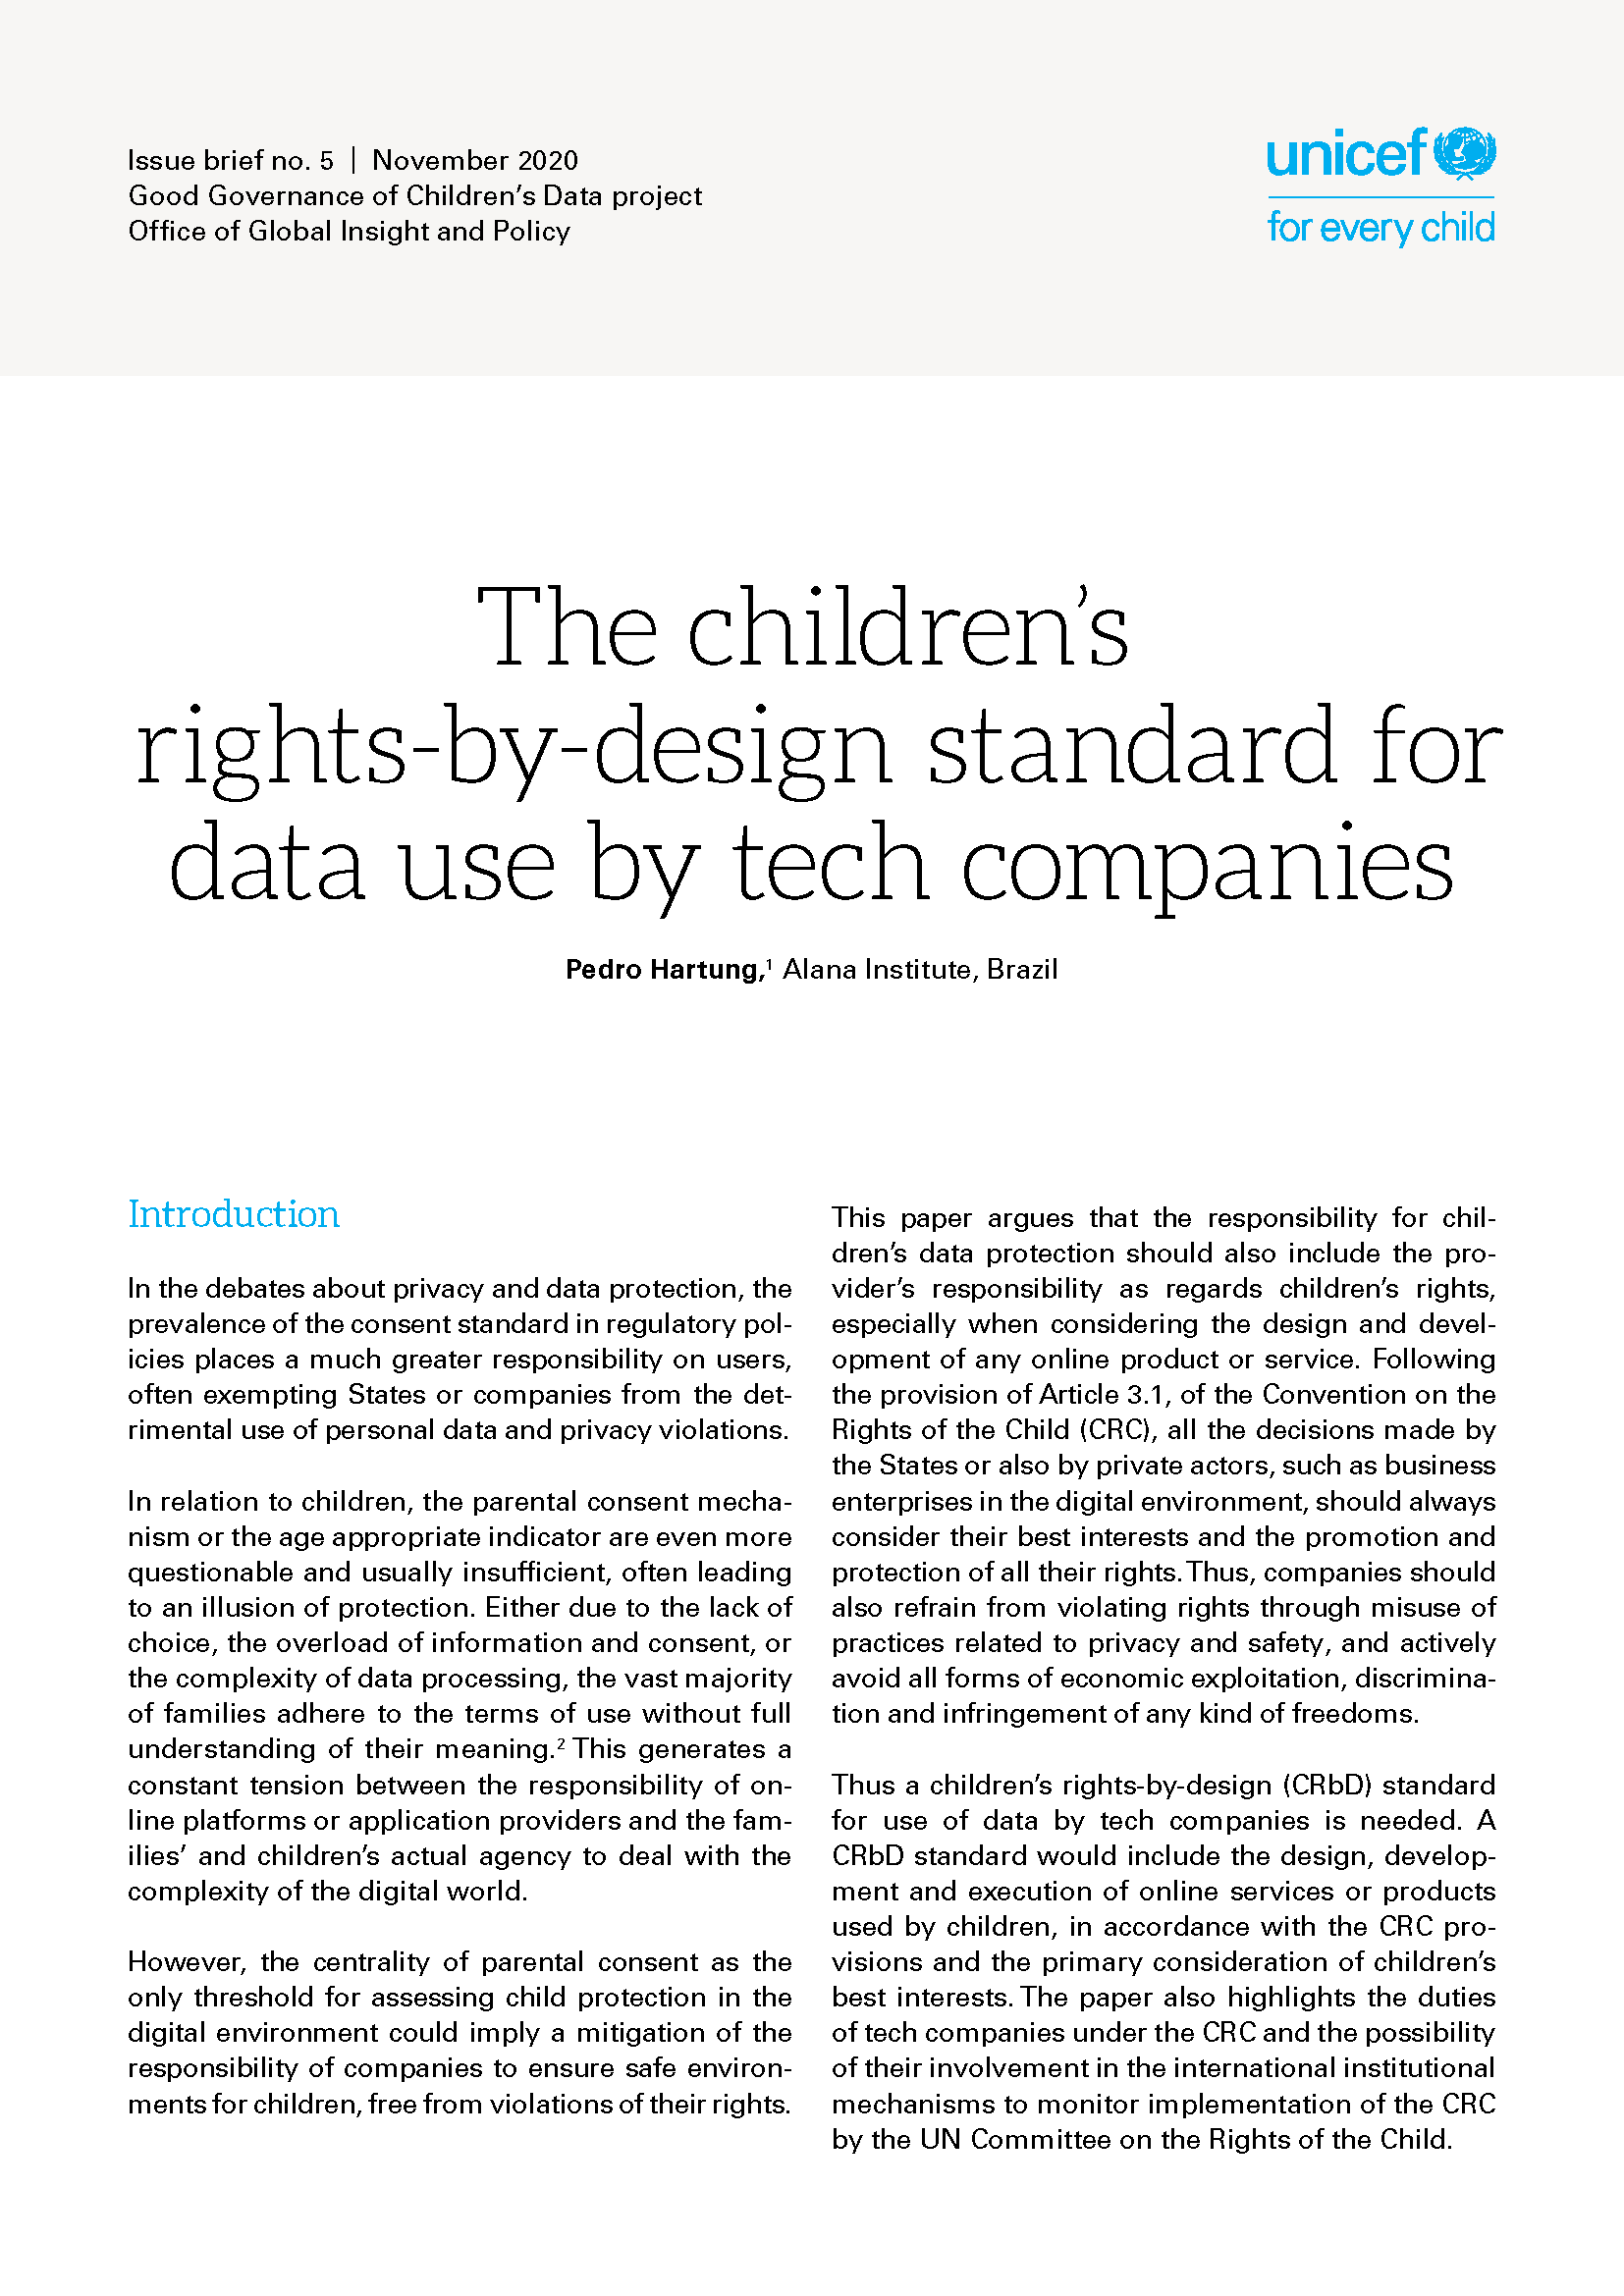 capa do artigo The children’s rights-by-design standard for data use by tech companies